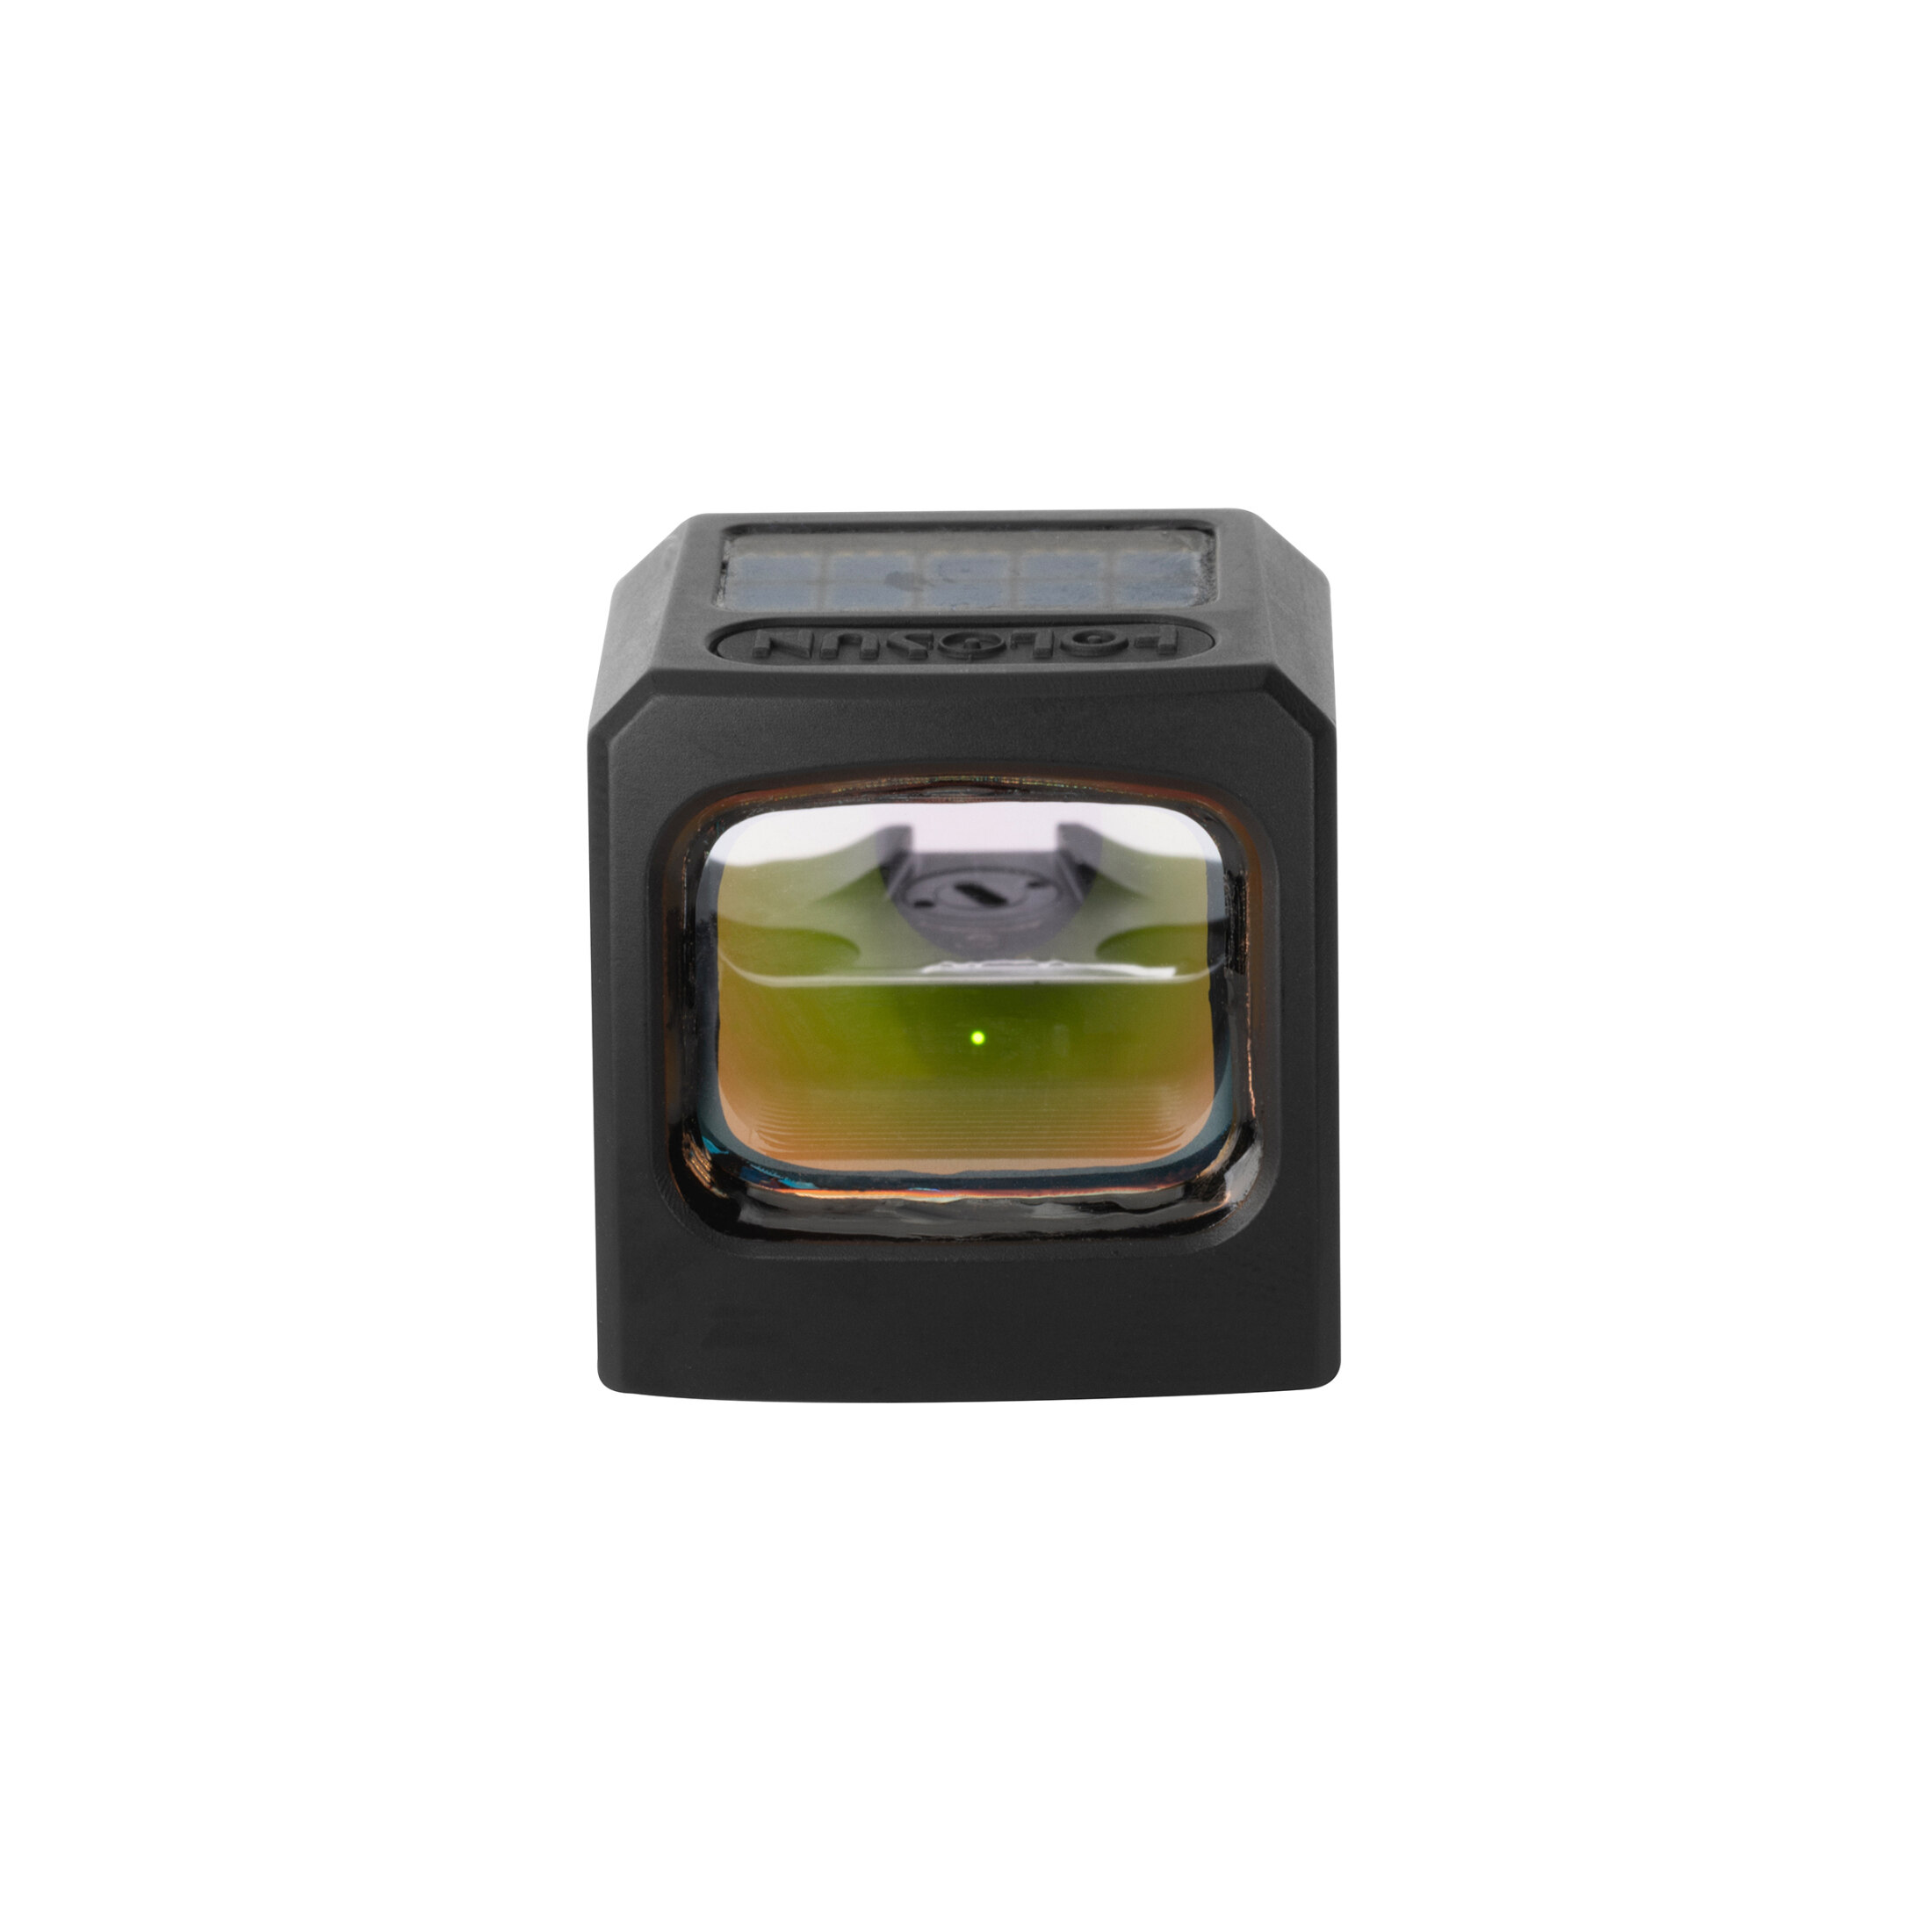 Holosun SCS-320-GR Micro-viseur mini Point vert Viseur Reflex Cercle avec point, Viseur Reflex, Rét…